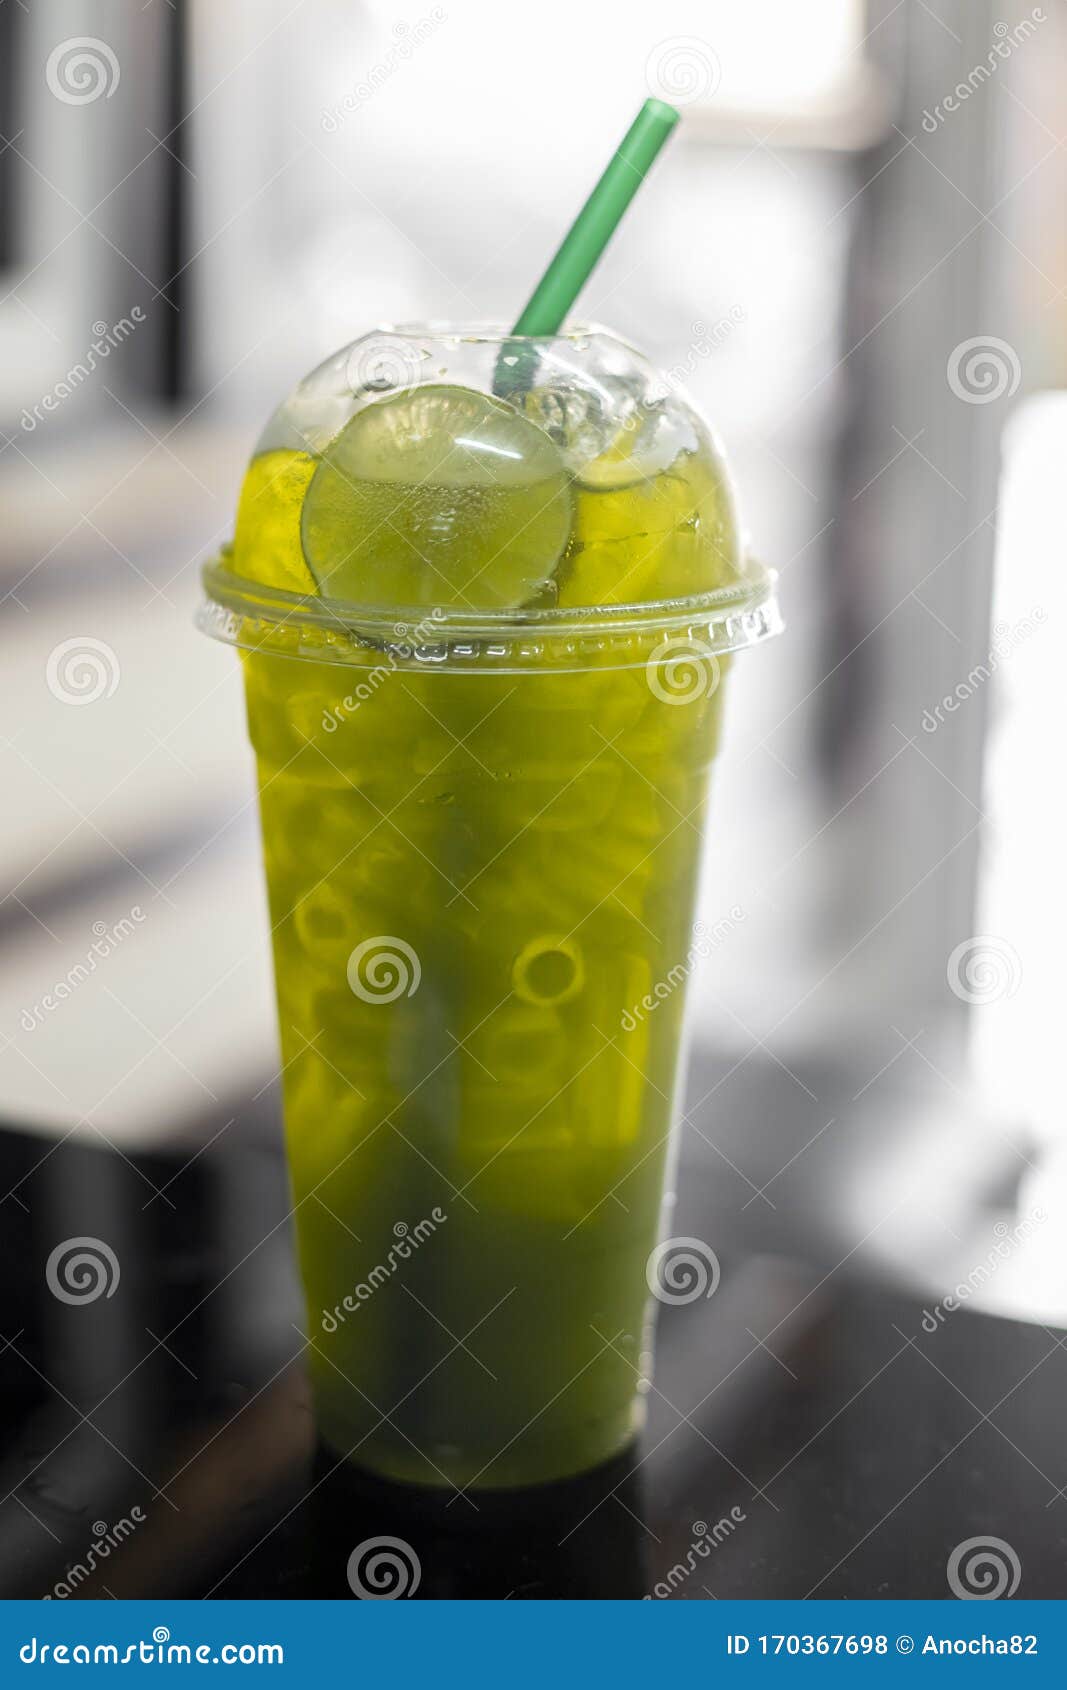 https://thumbs.dreamstime.com/z/iced-green-tea-lemon-straw-iced-green-tea-lemon-straw-table-170367698.jpg